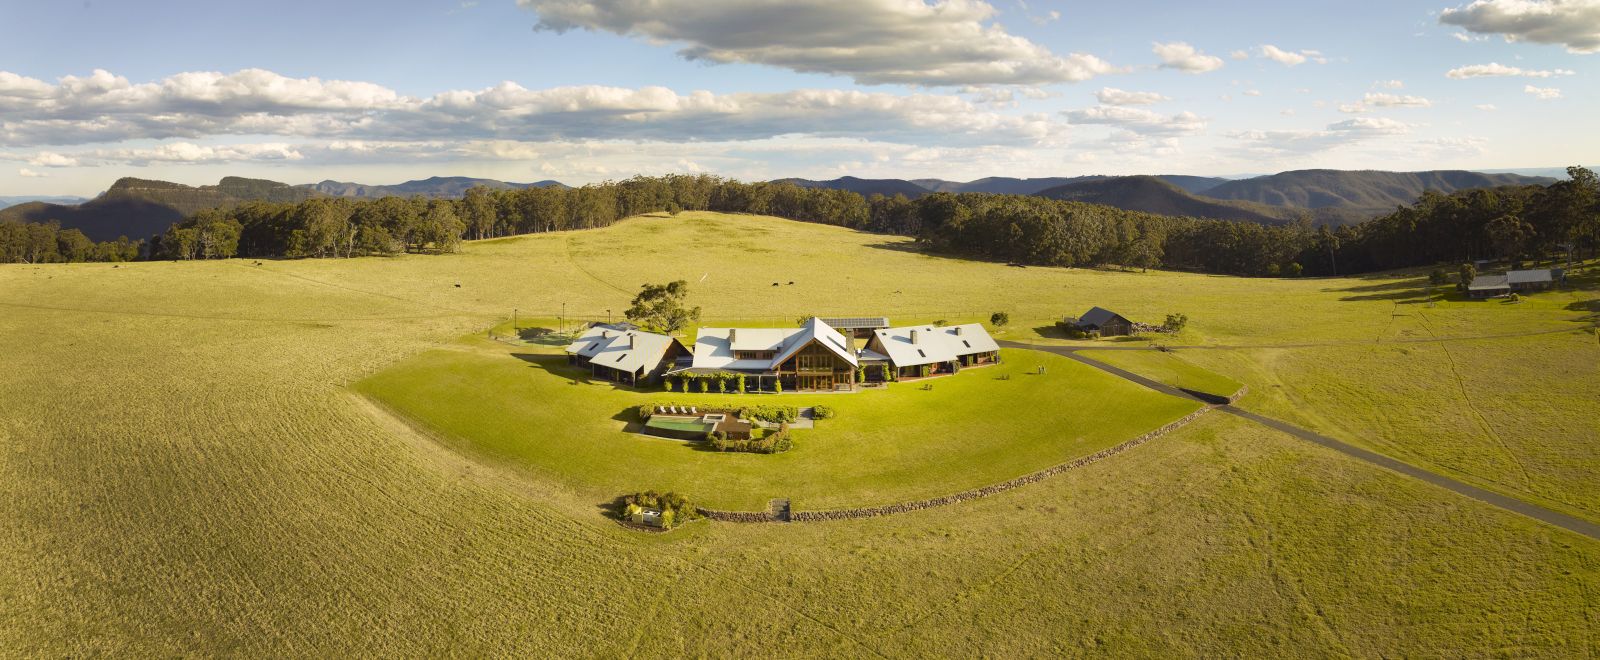 Aerial view of Spicers Peak Lodge in Australia 